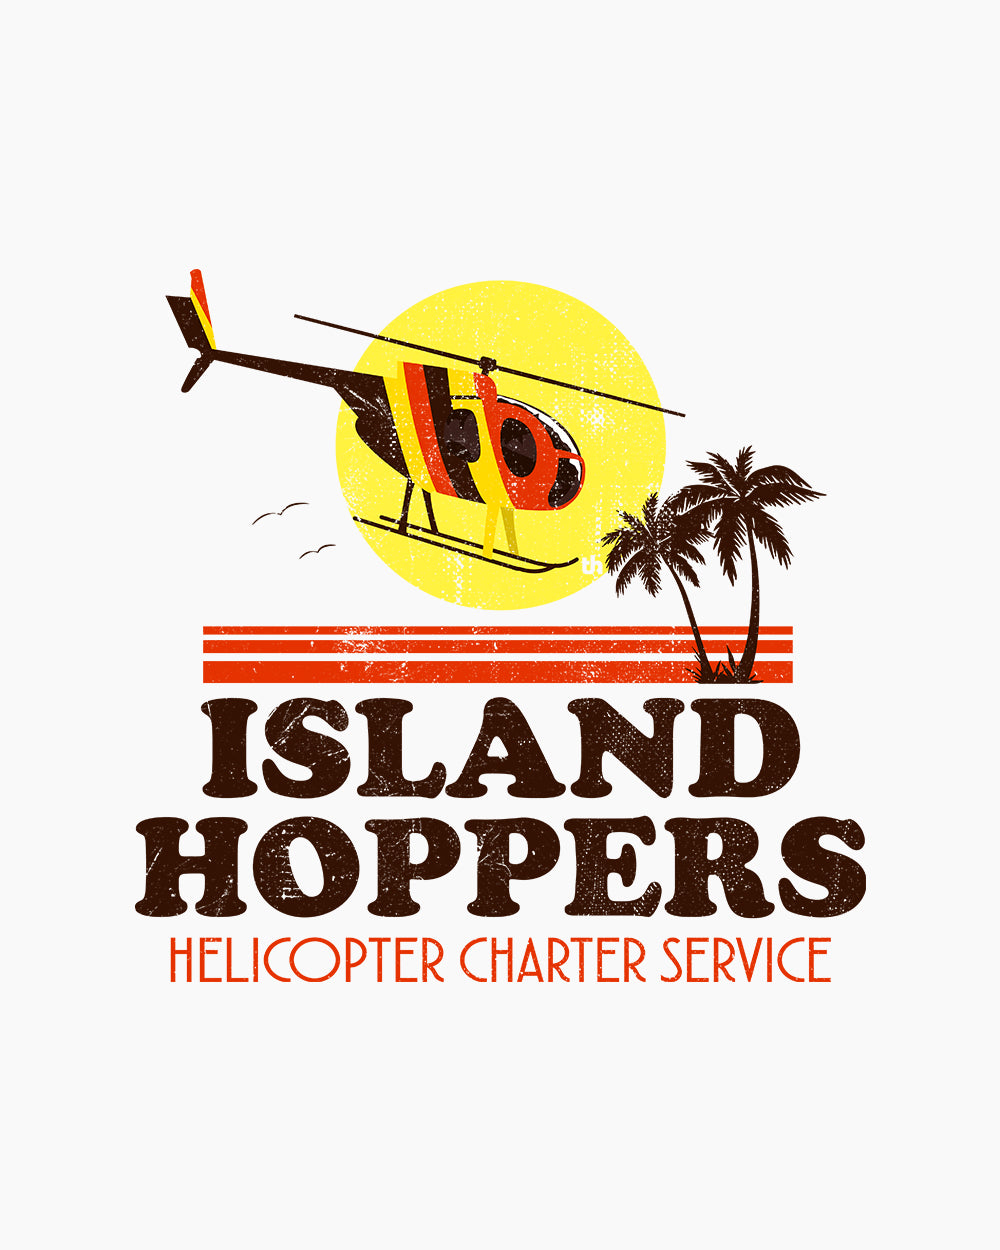 Island Hoppers T-Shirt Australia Online #colour_white